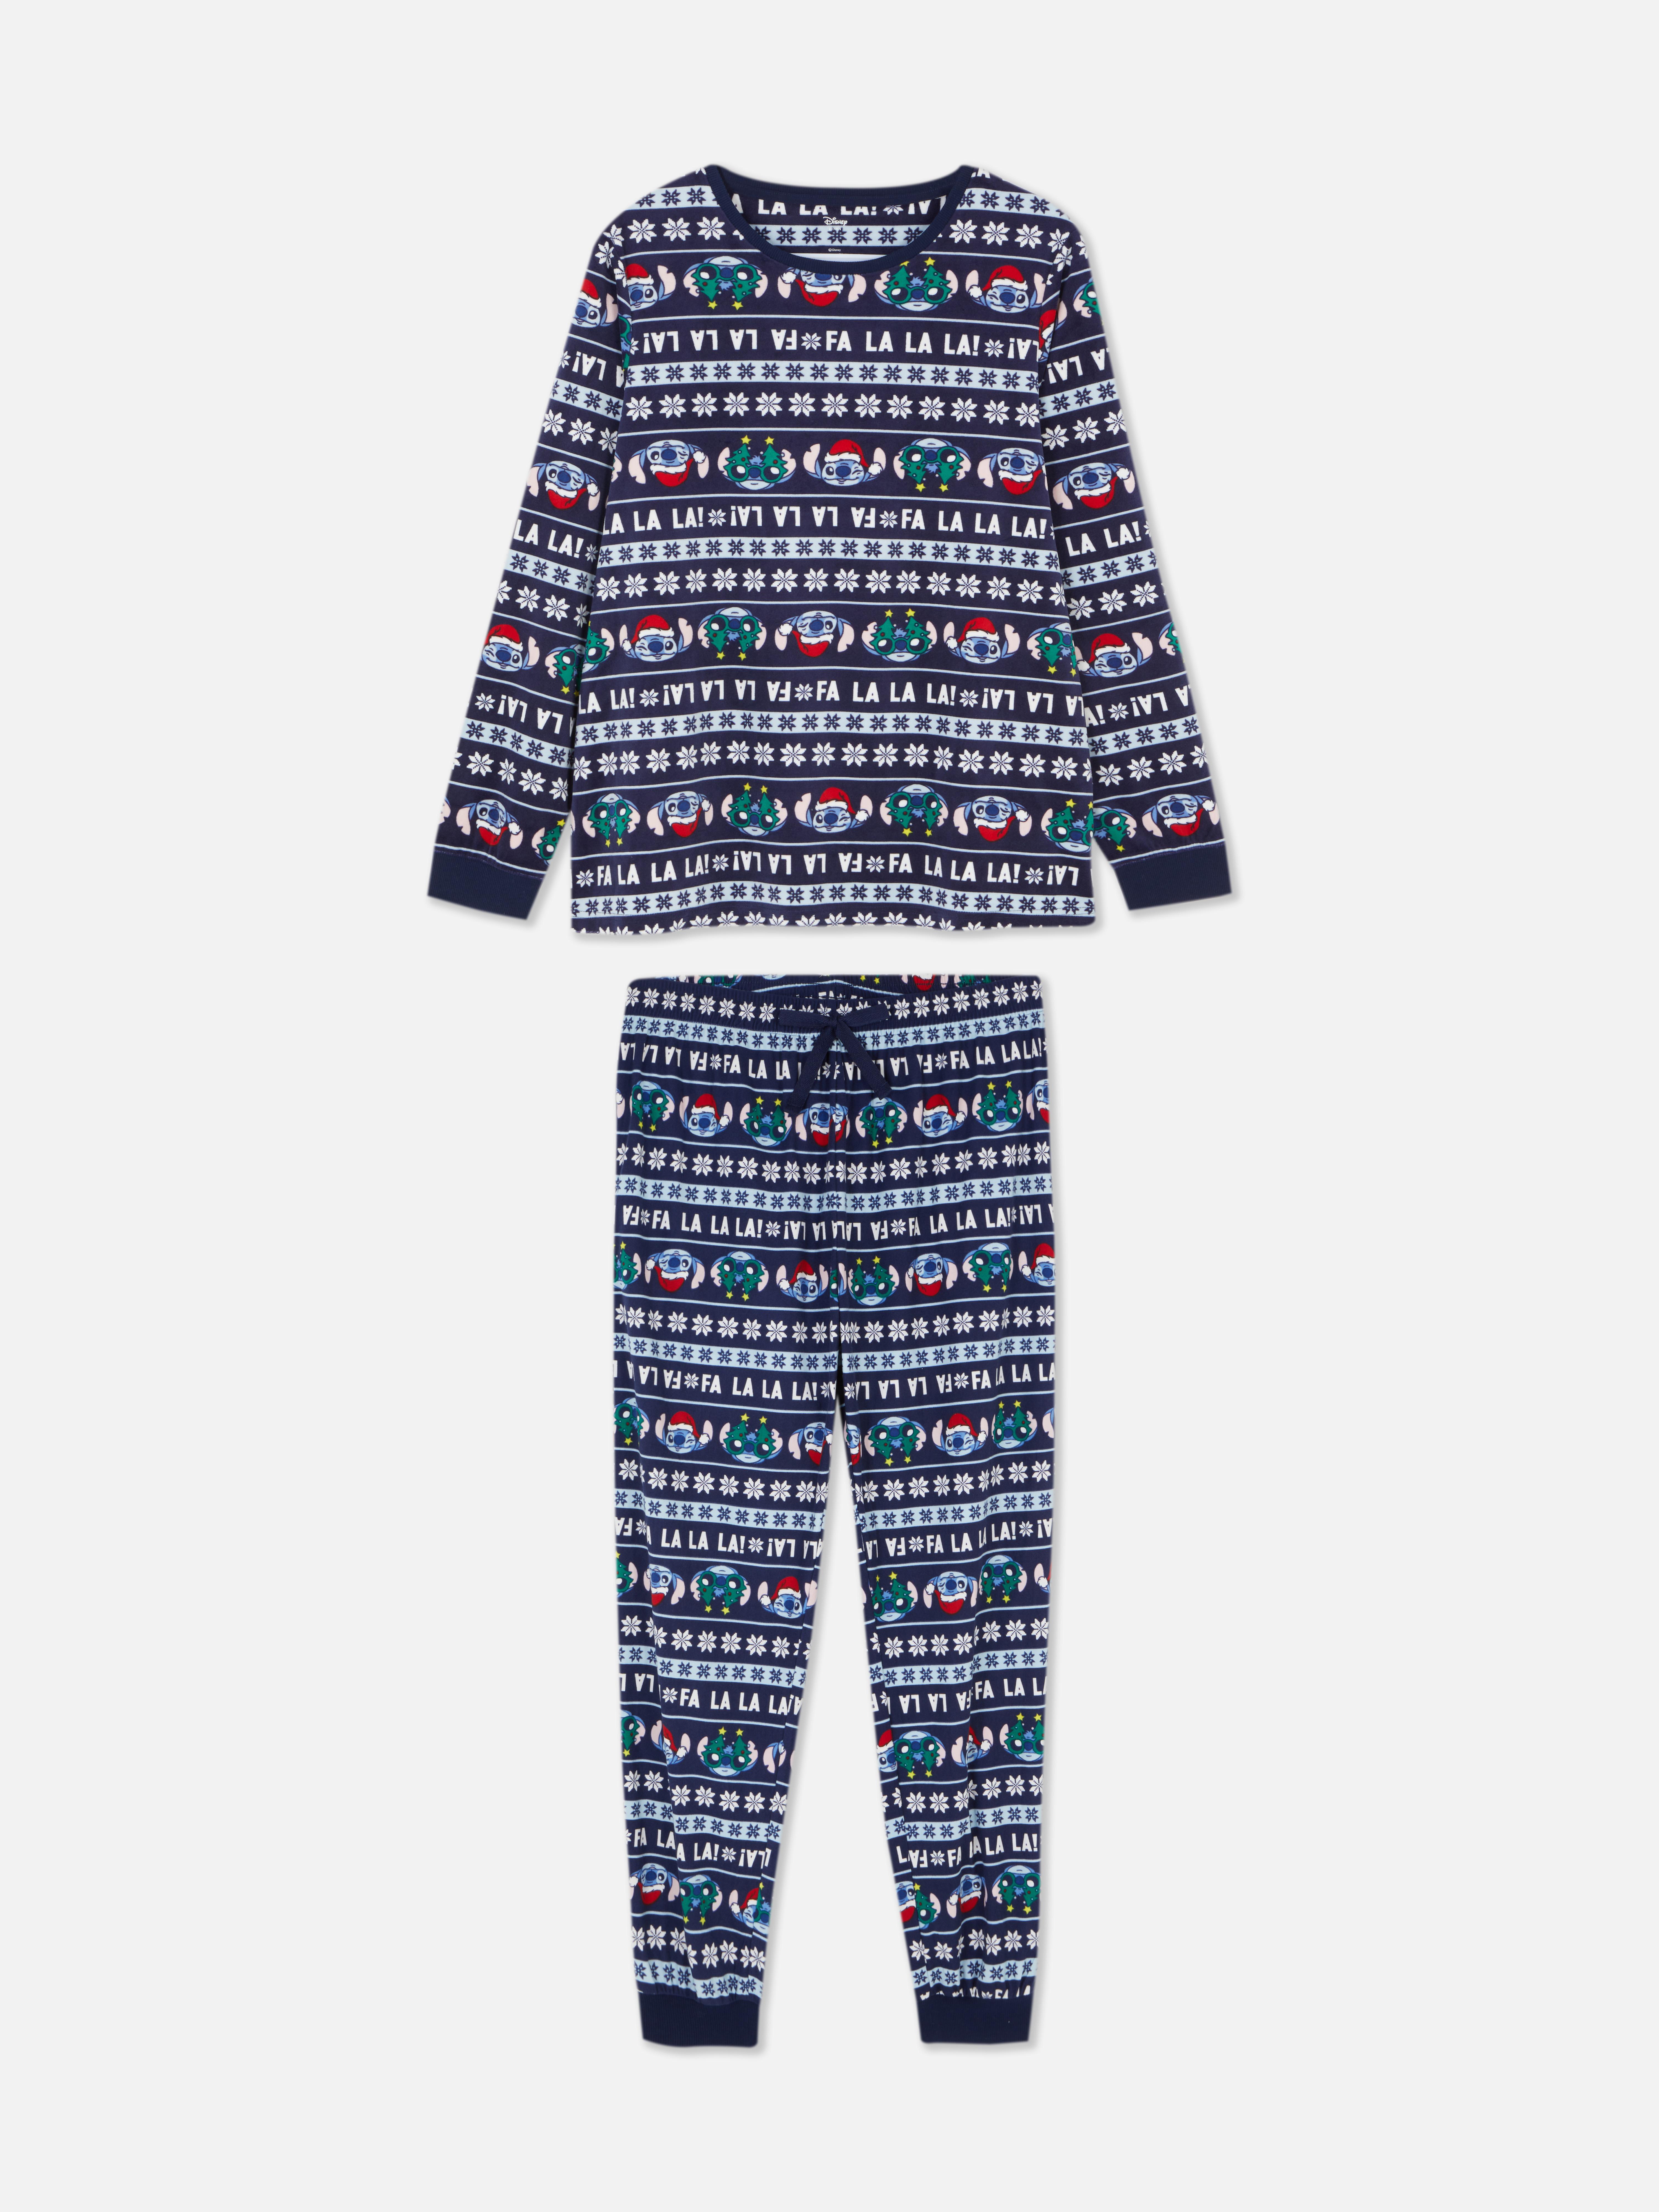 Pyjama de Noël pour la famille Disney Lilo & Stitch femme